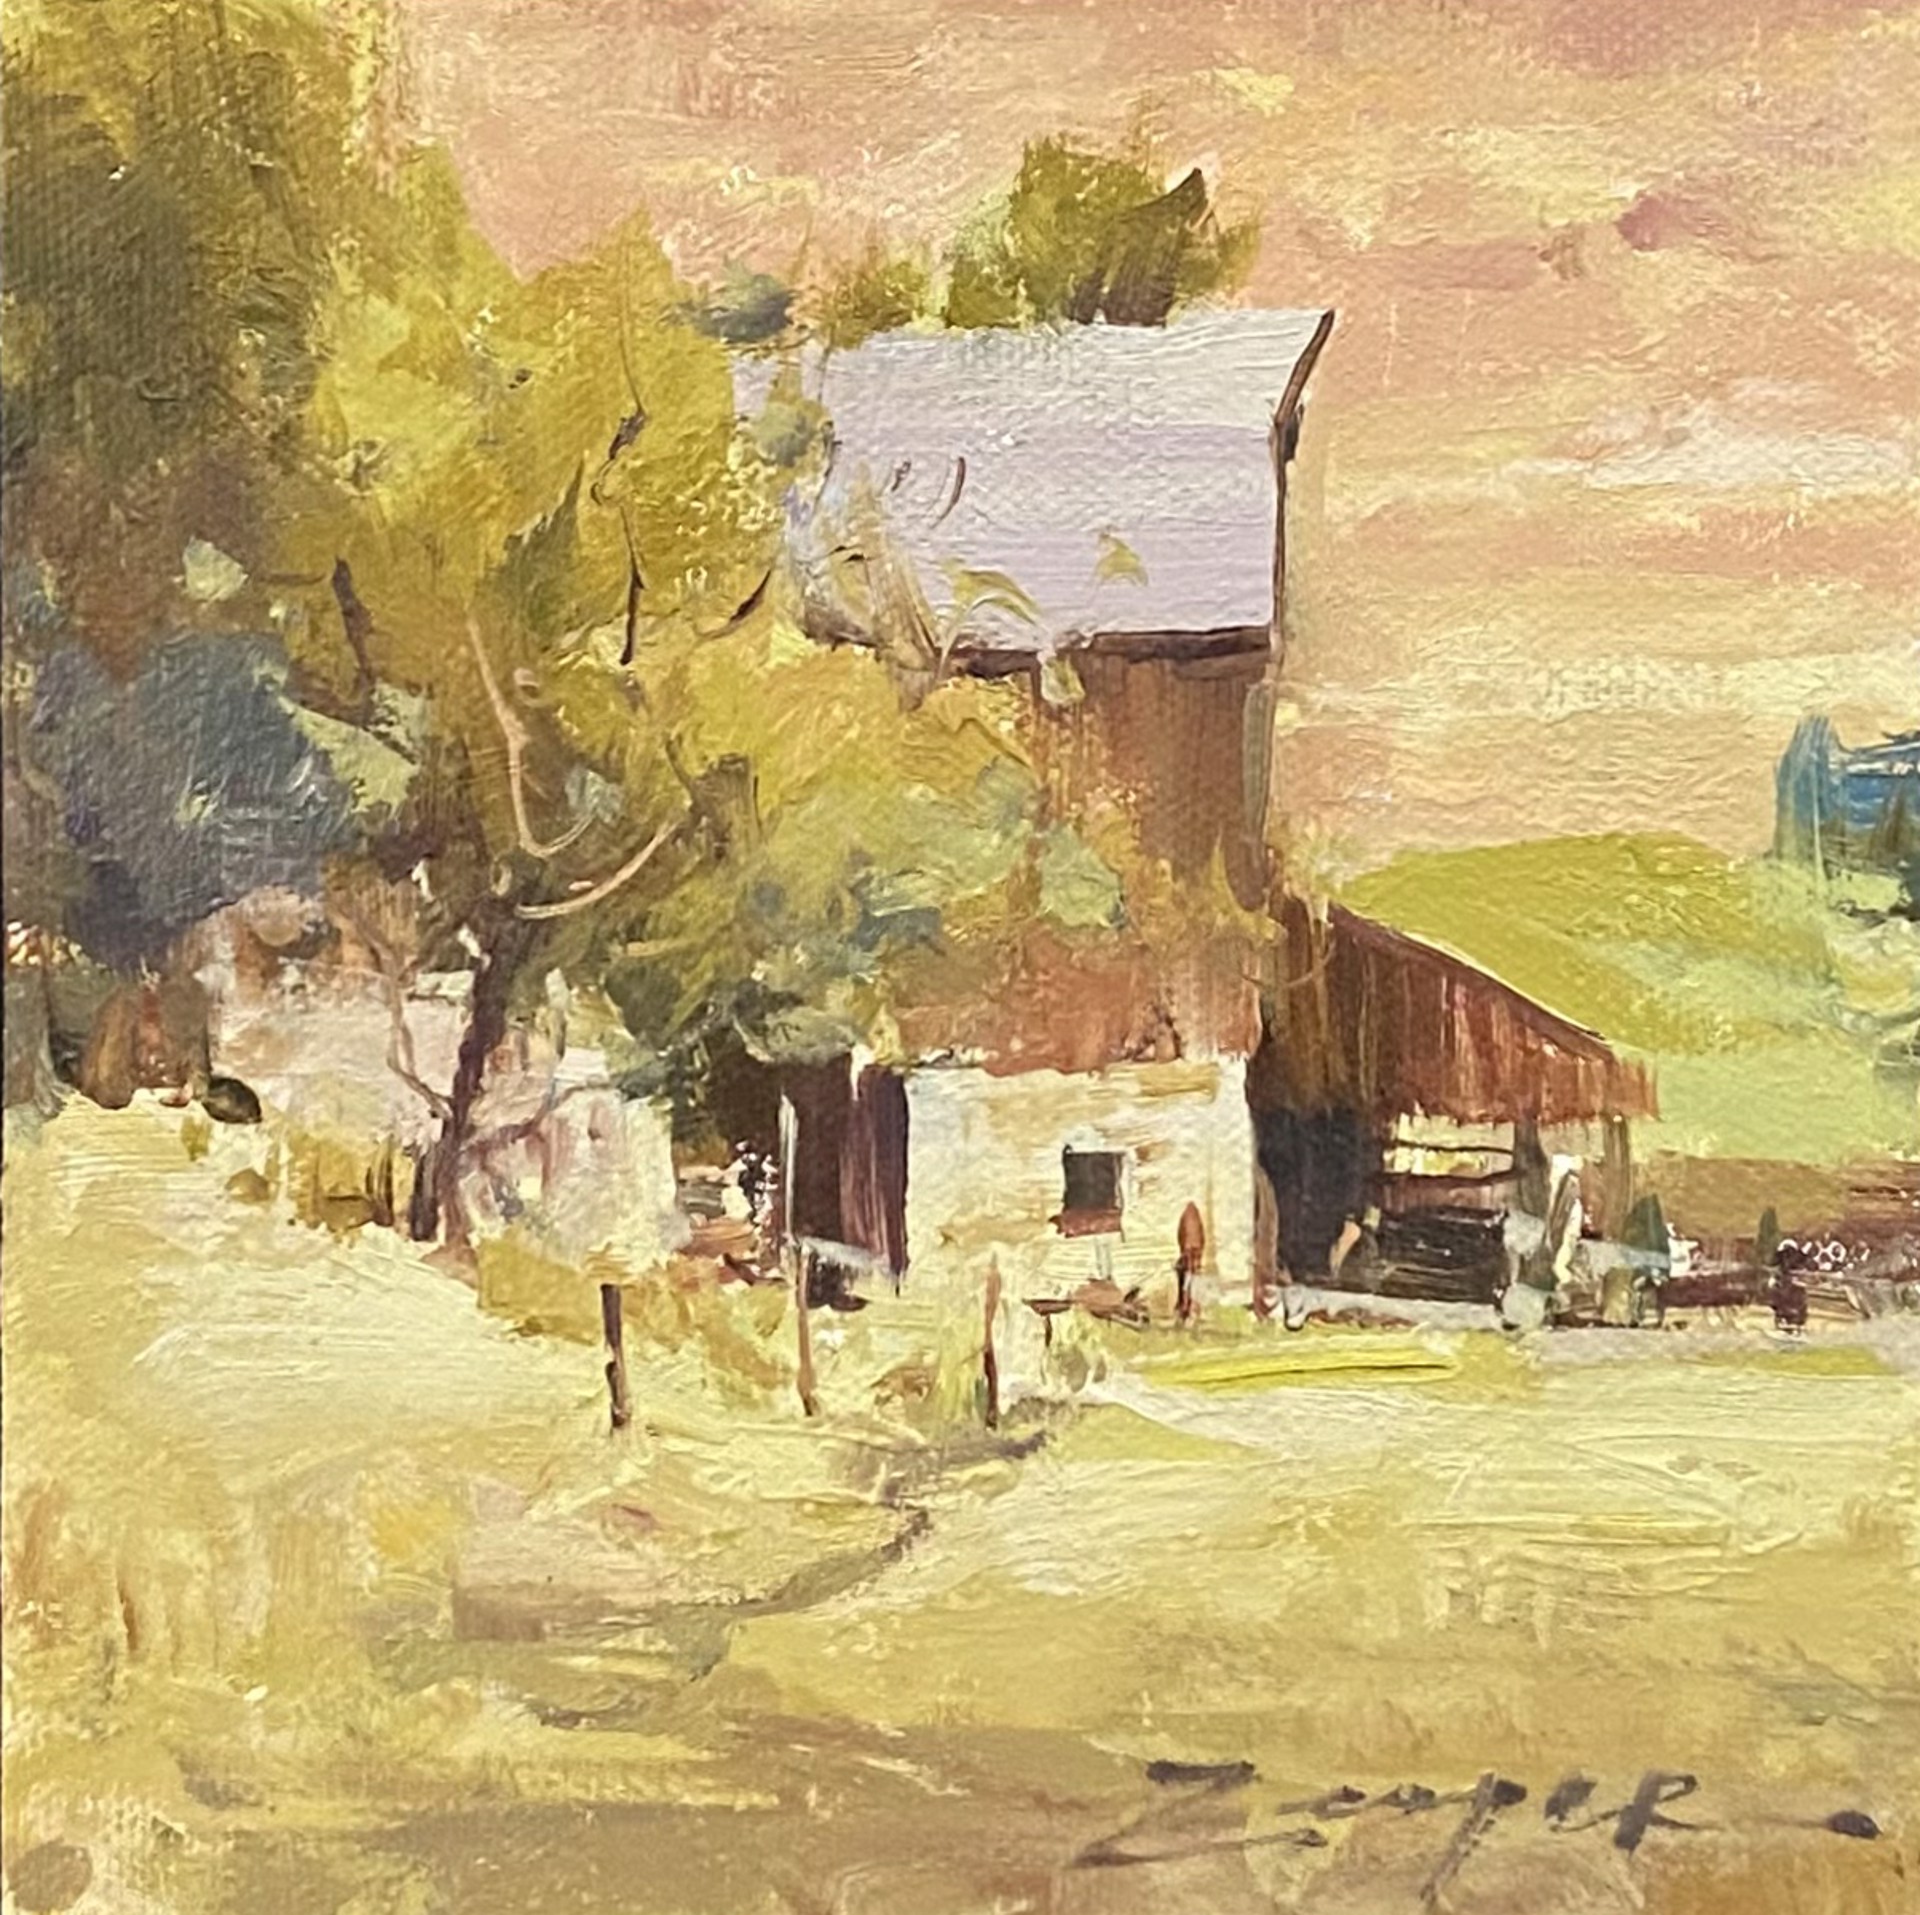 Rigby Barn Study by Allie Zeyer